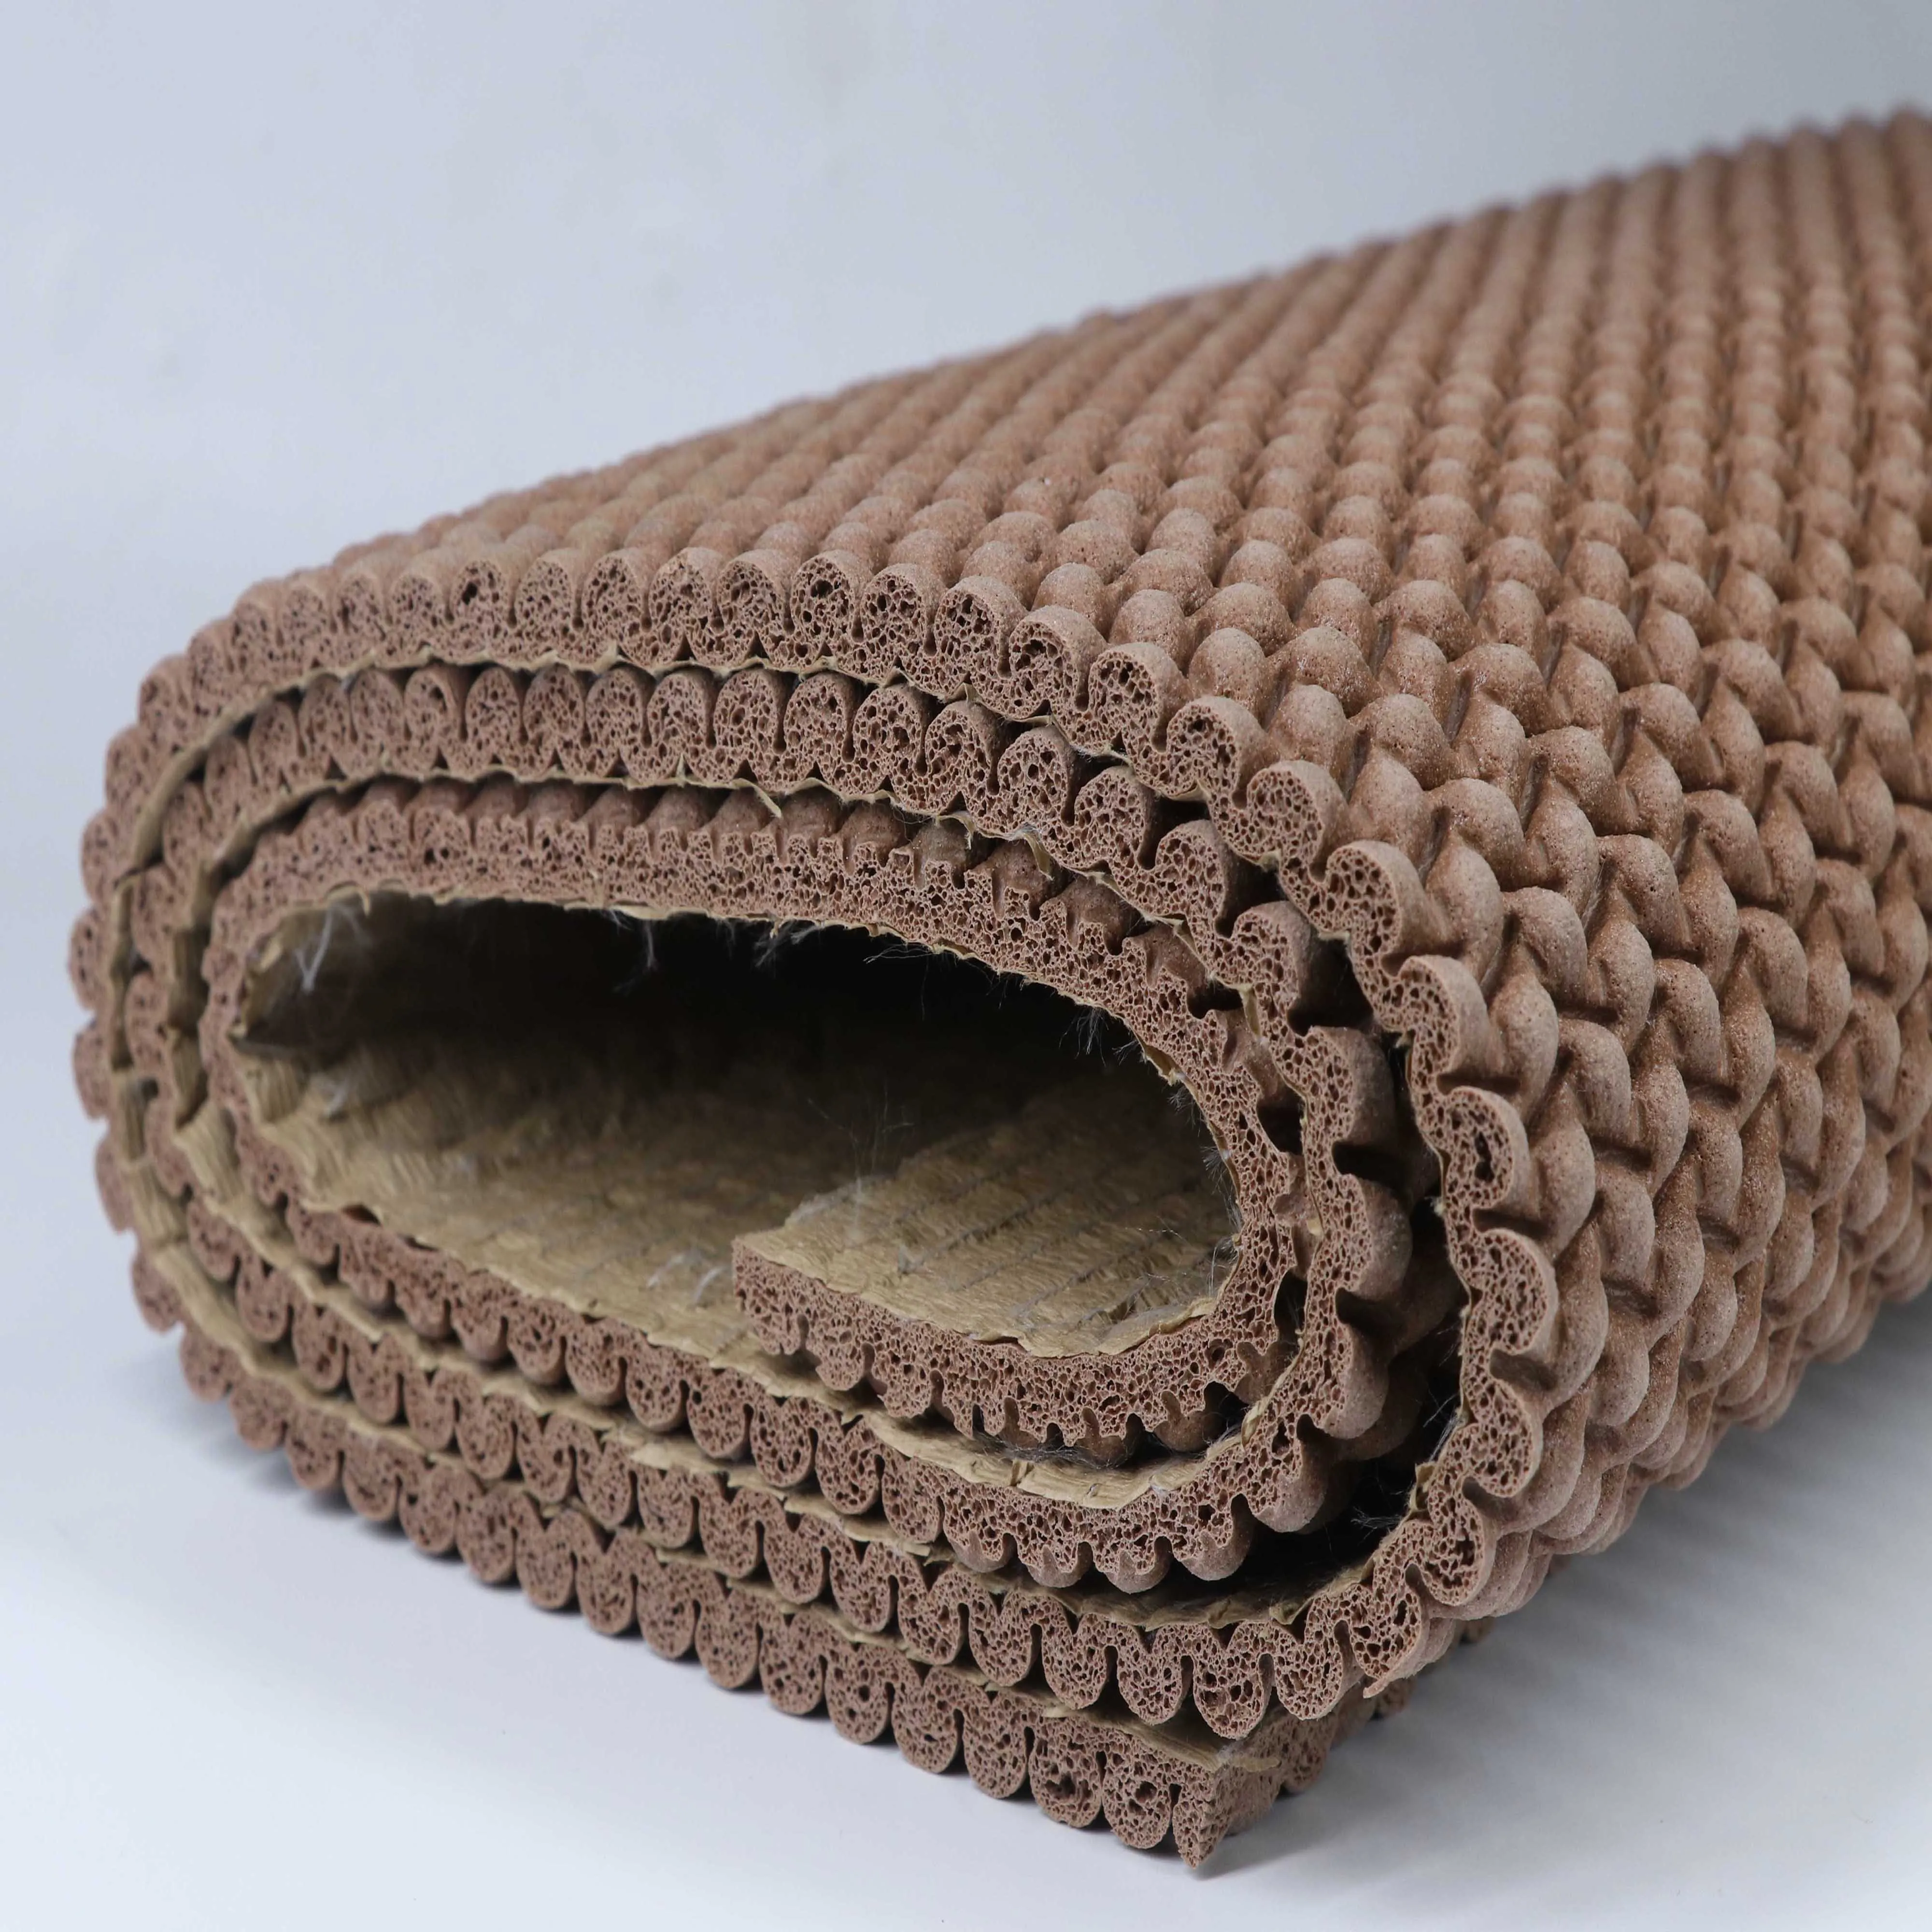 high performance natural rubber carpet underlay